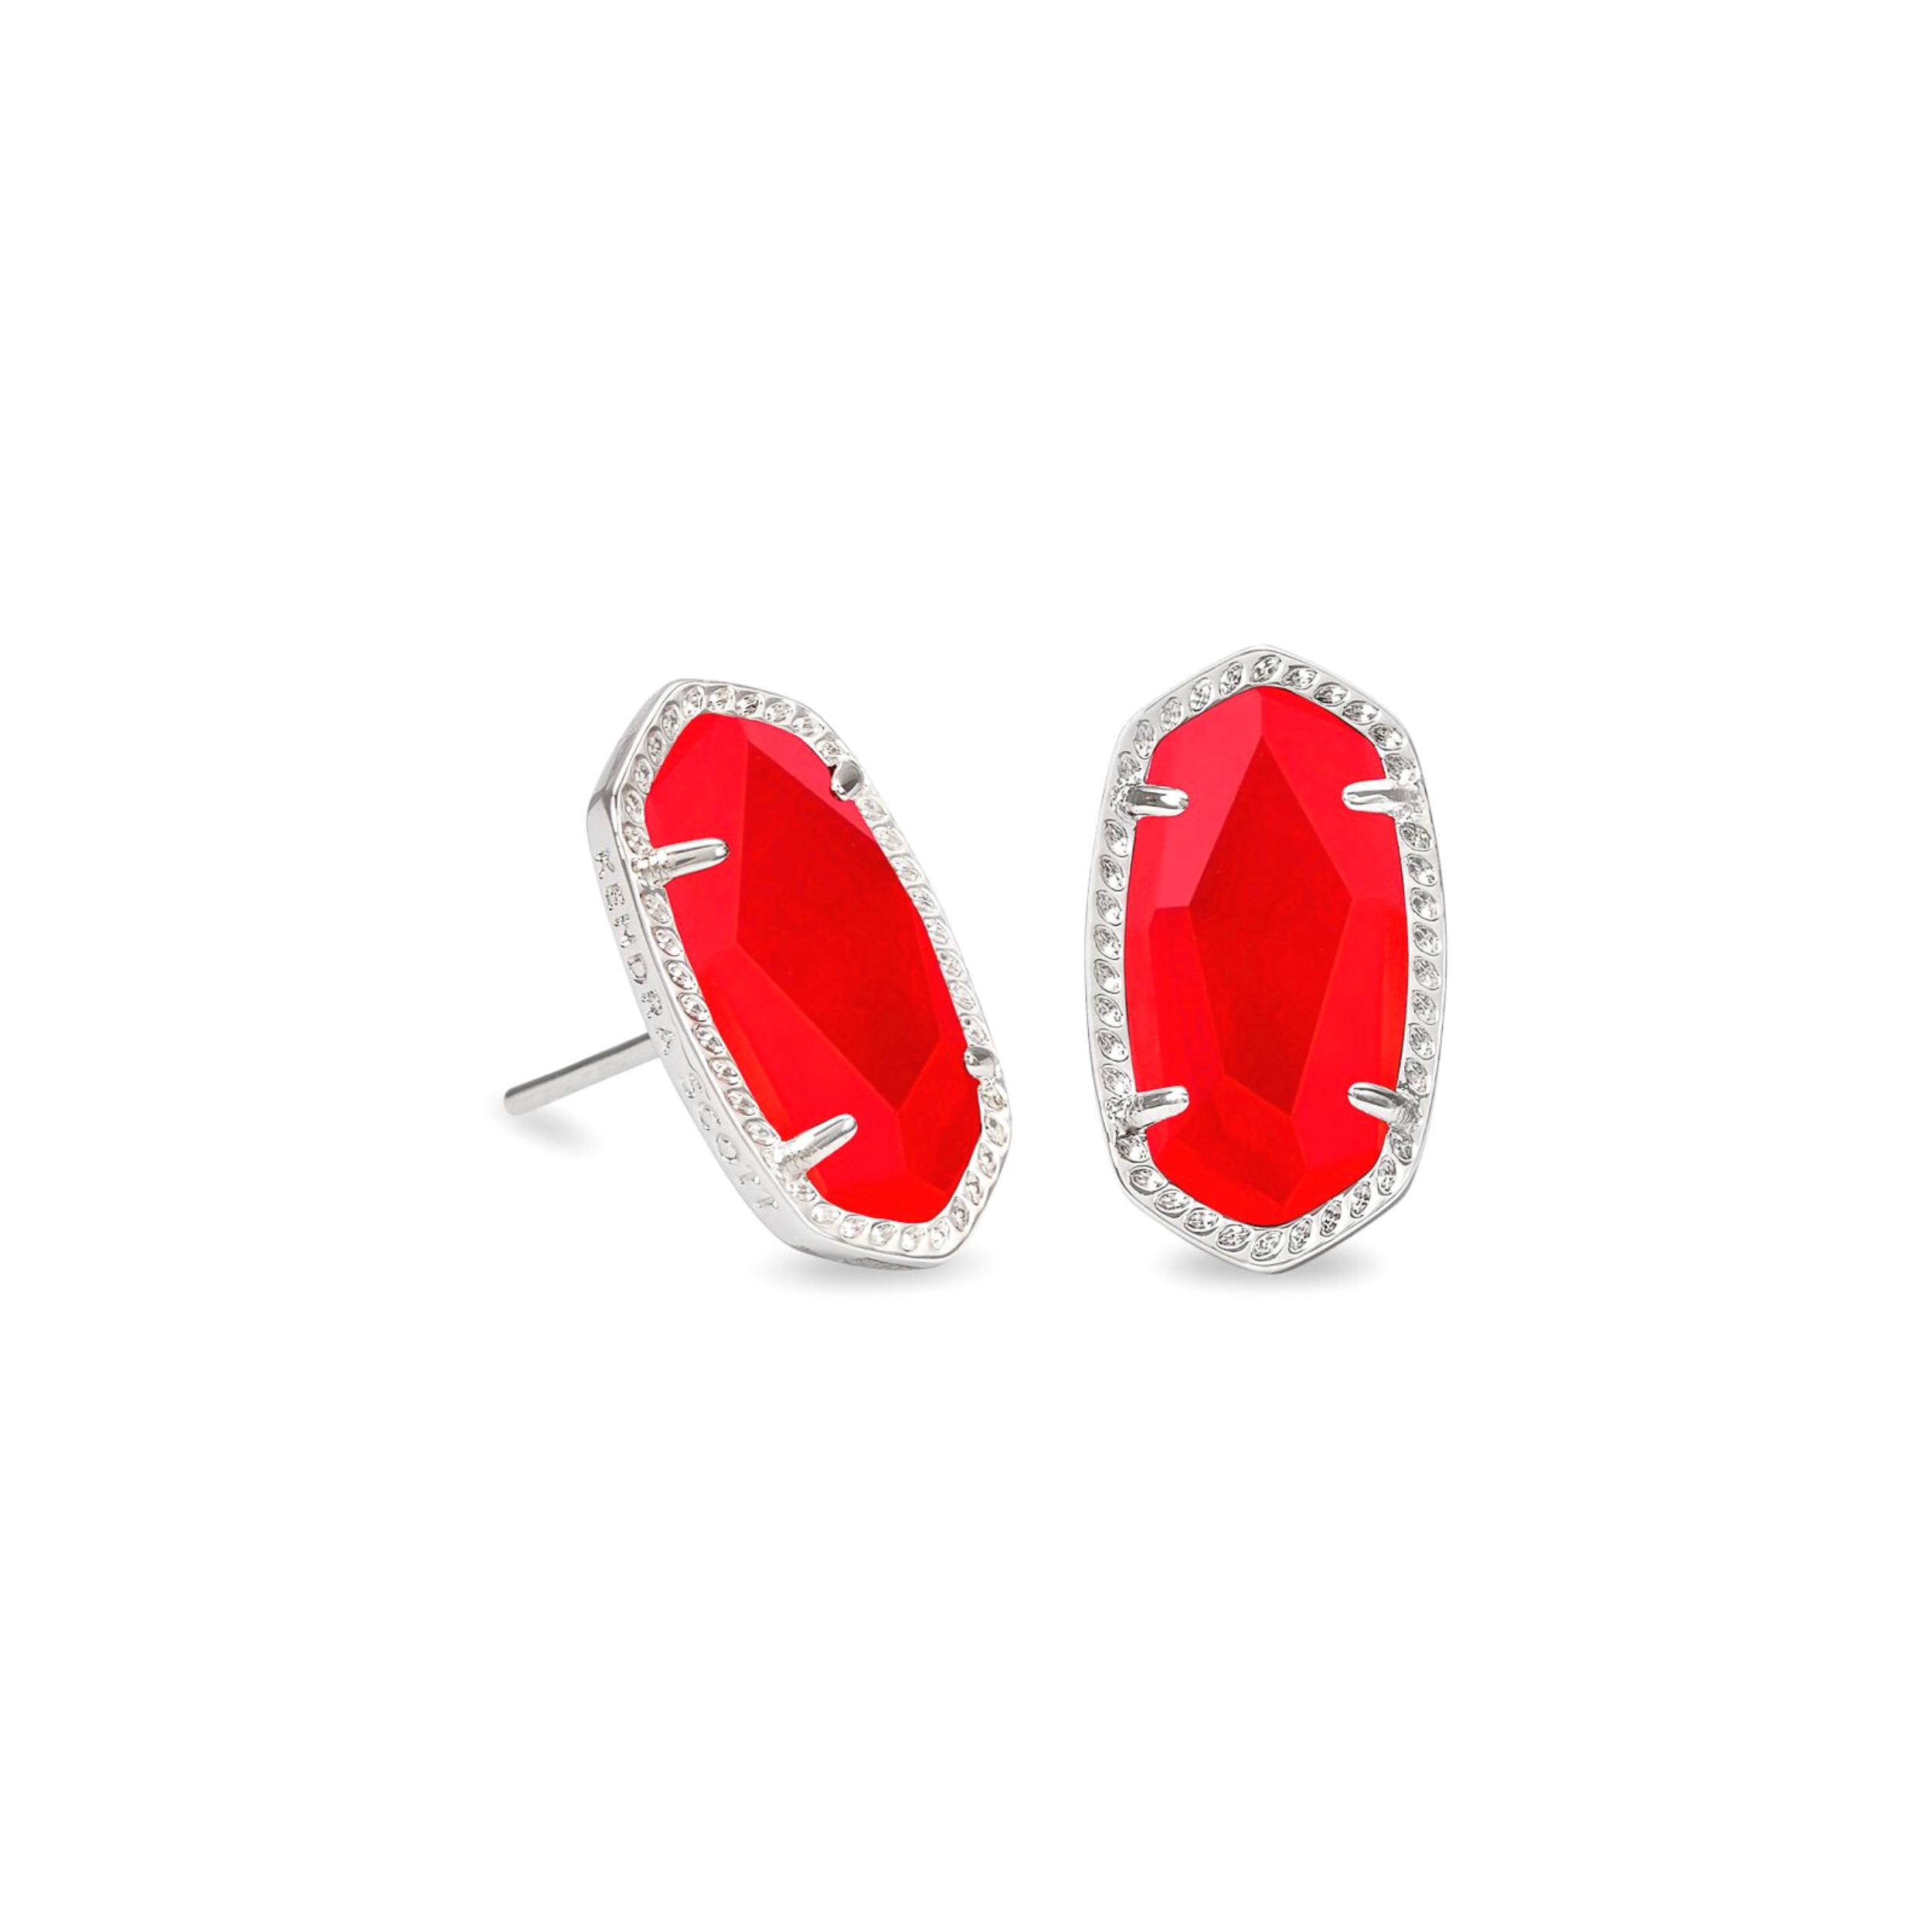 Kendra Scott | Ellie Silver Stud Earrings in Red Illusion